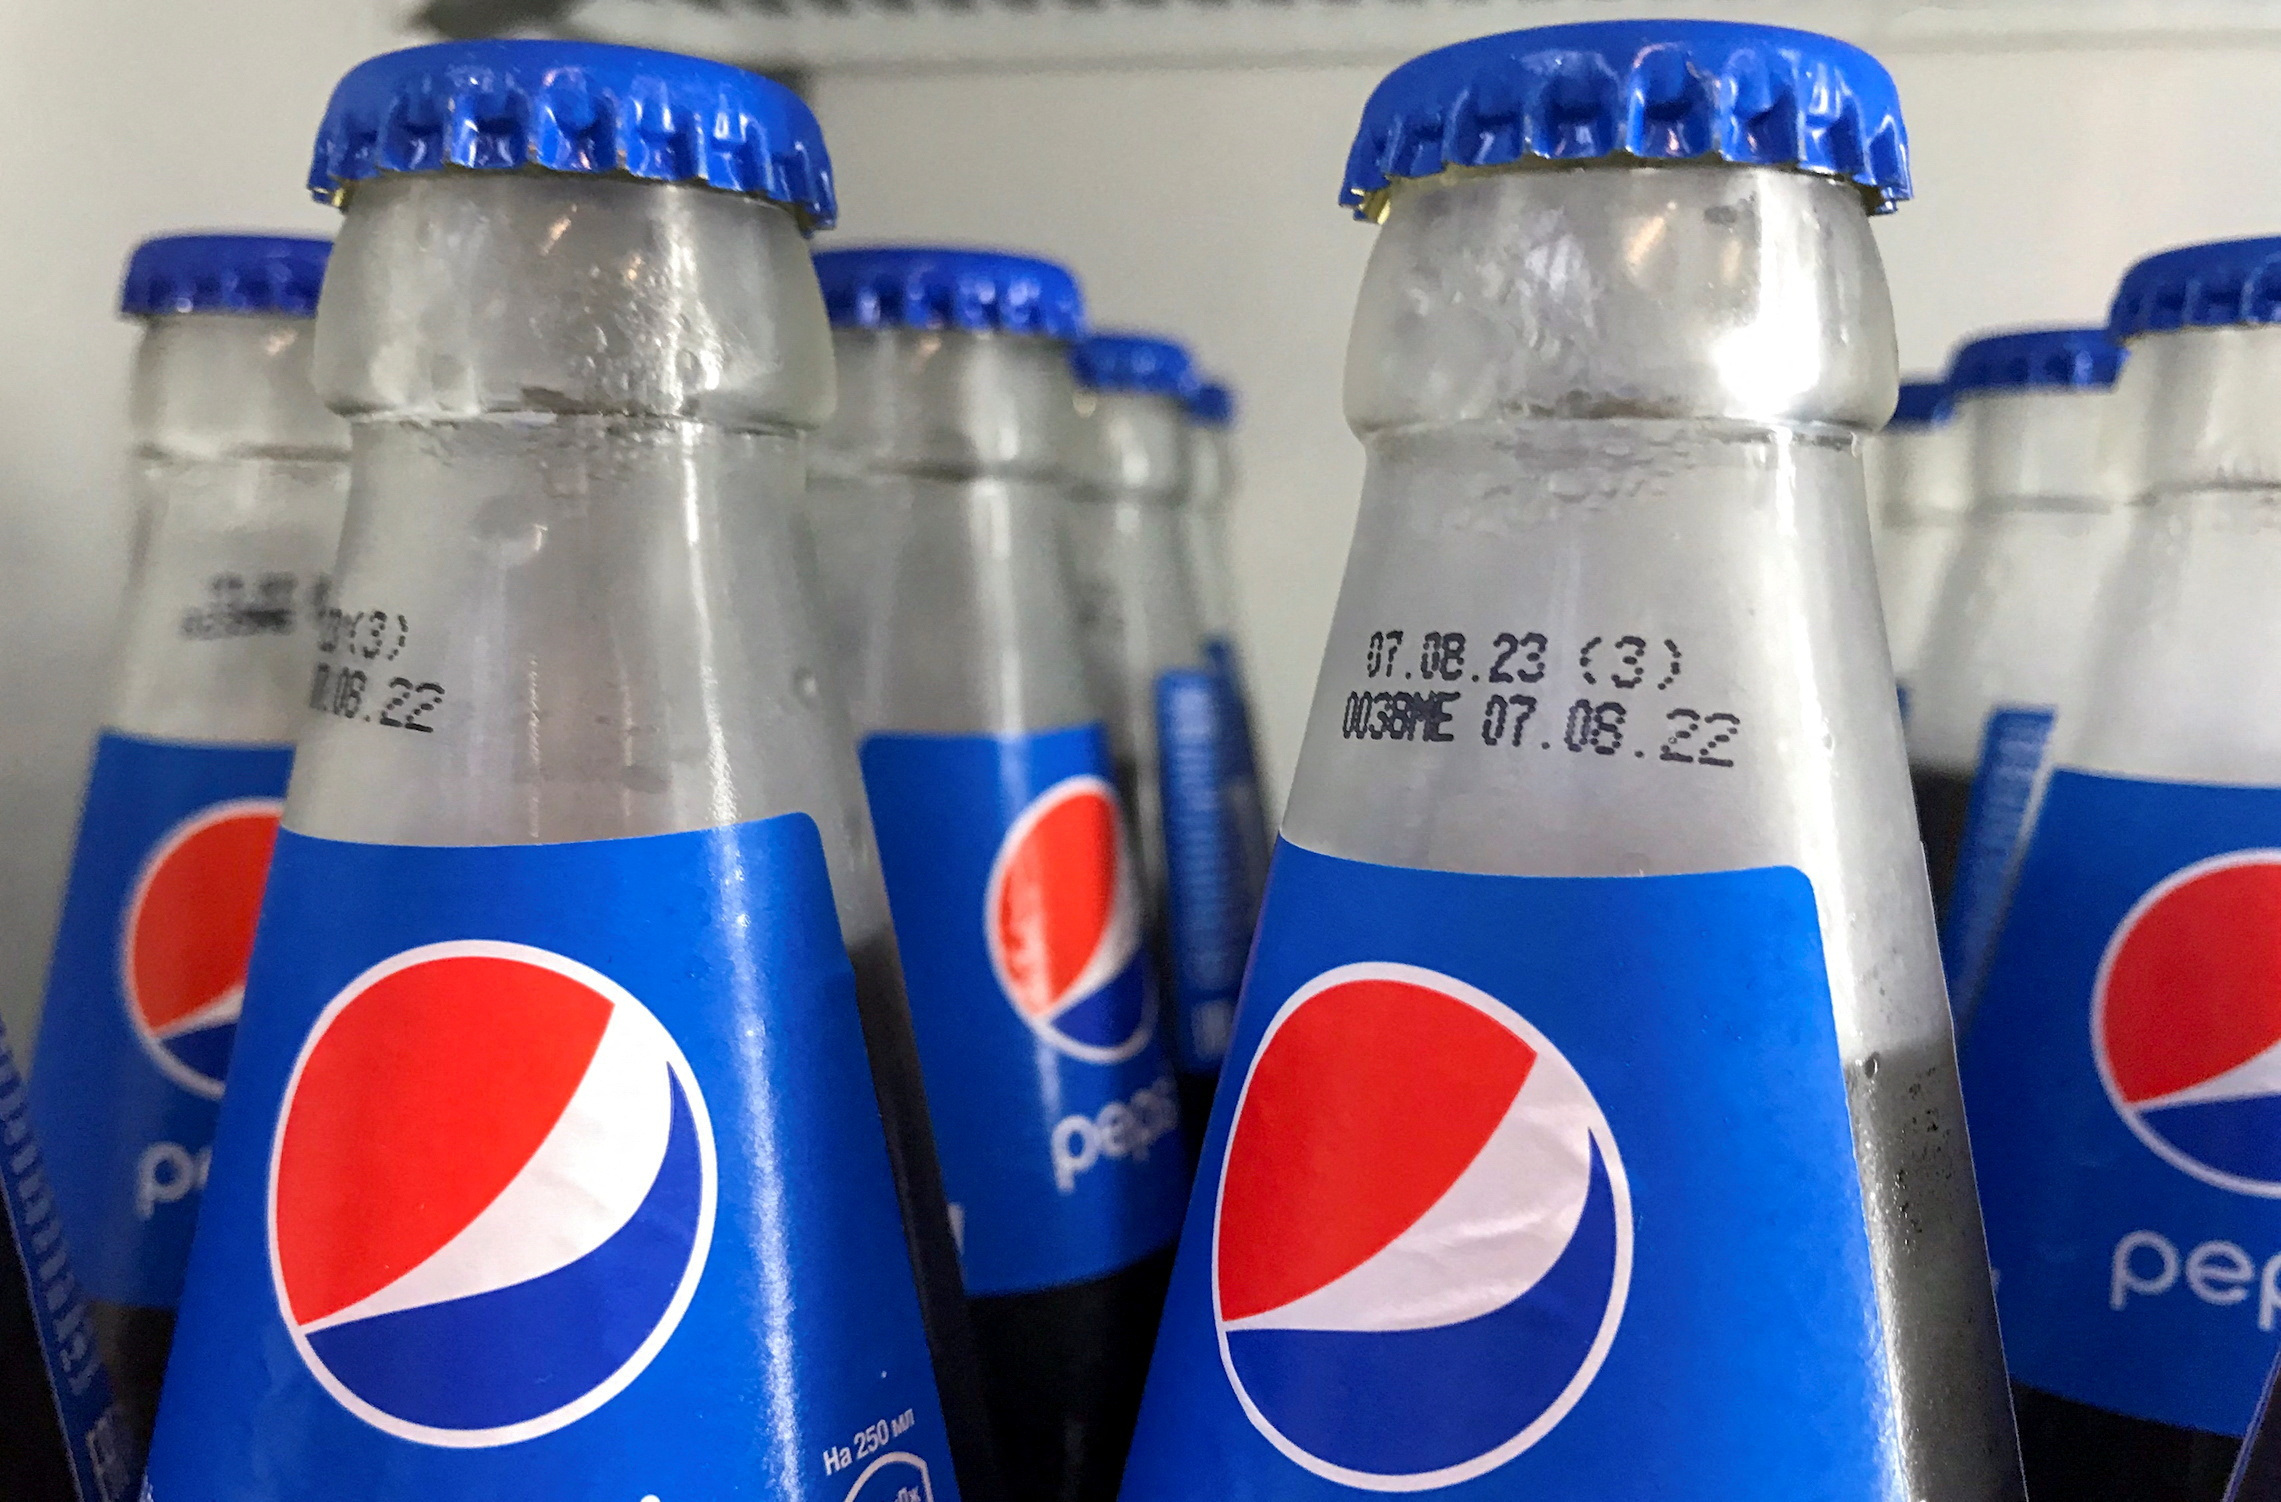 its aspartame has WHO sweeteners plans warn says no PepsiCo as | change to Reuters it portfolio set to on